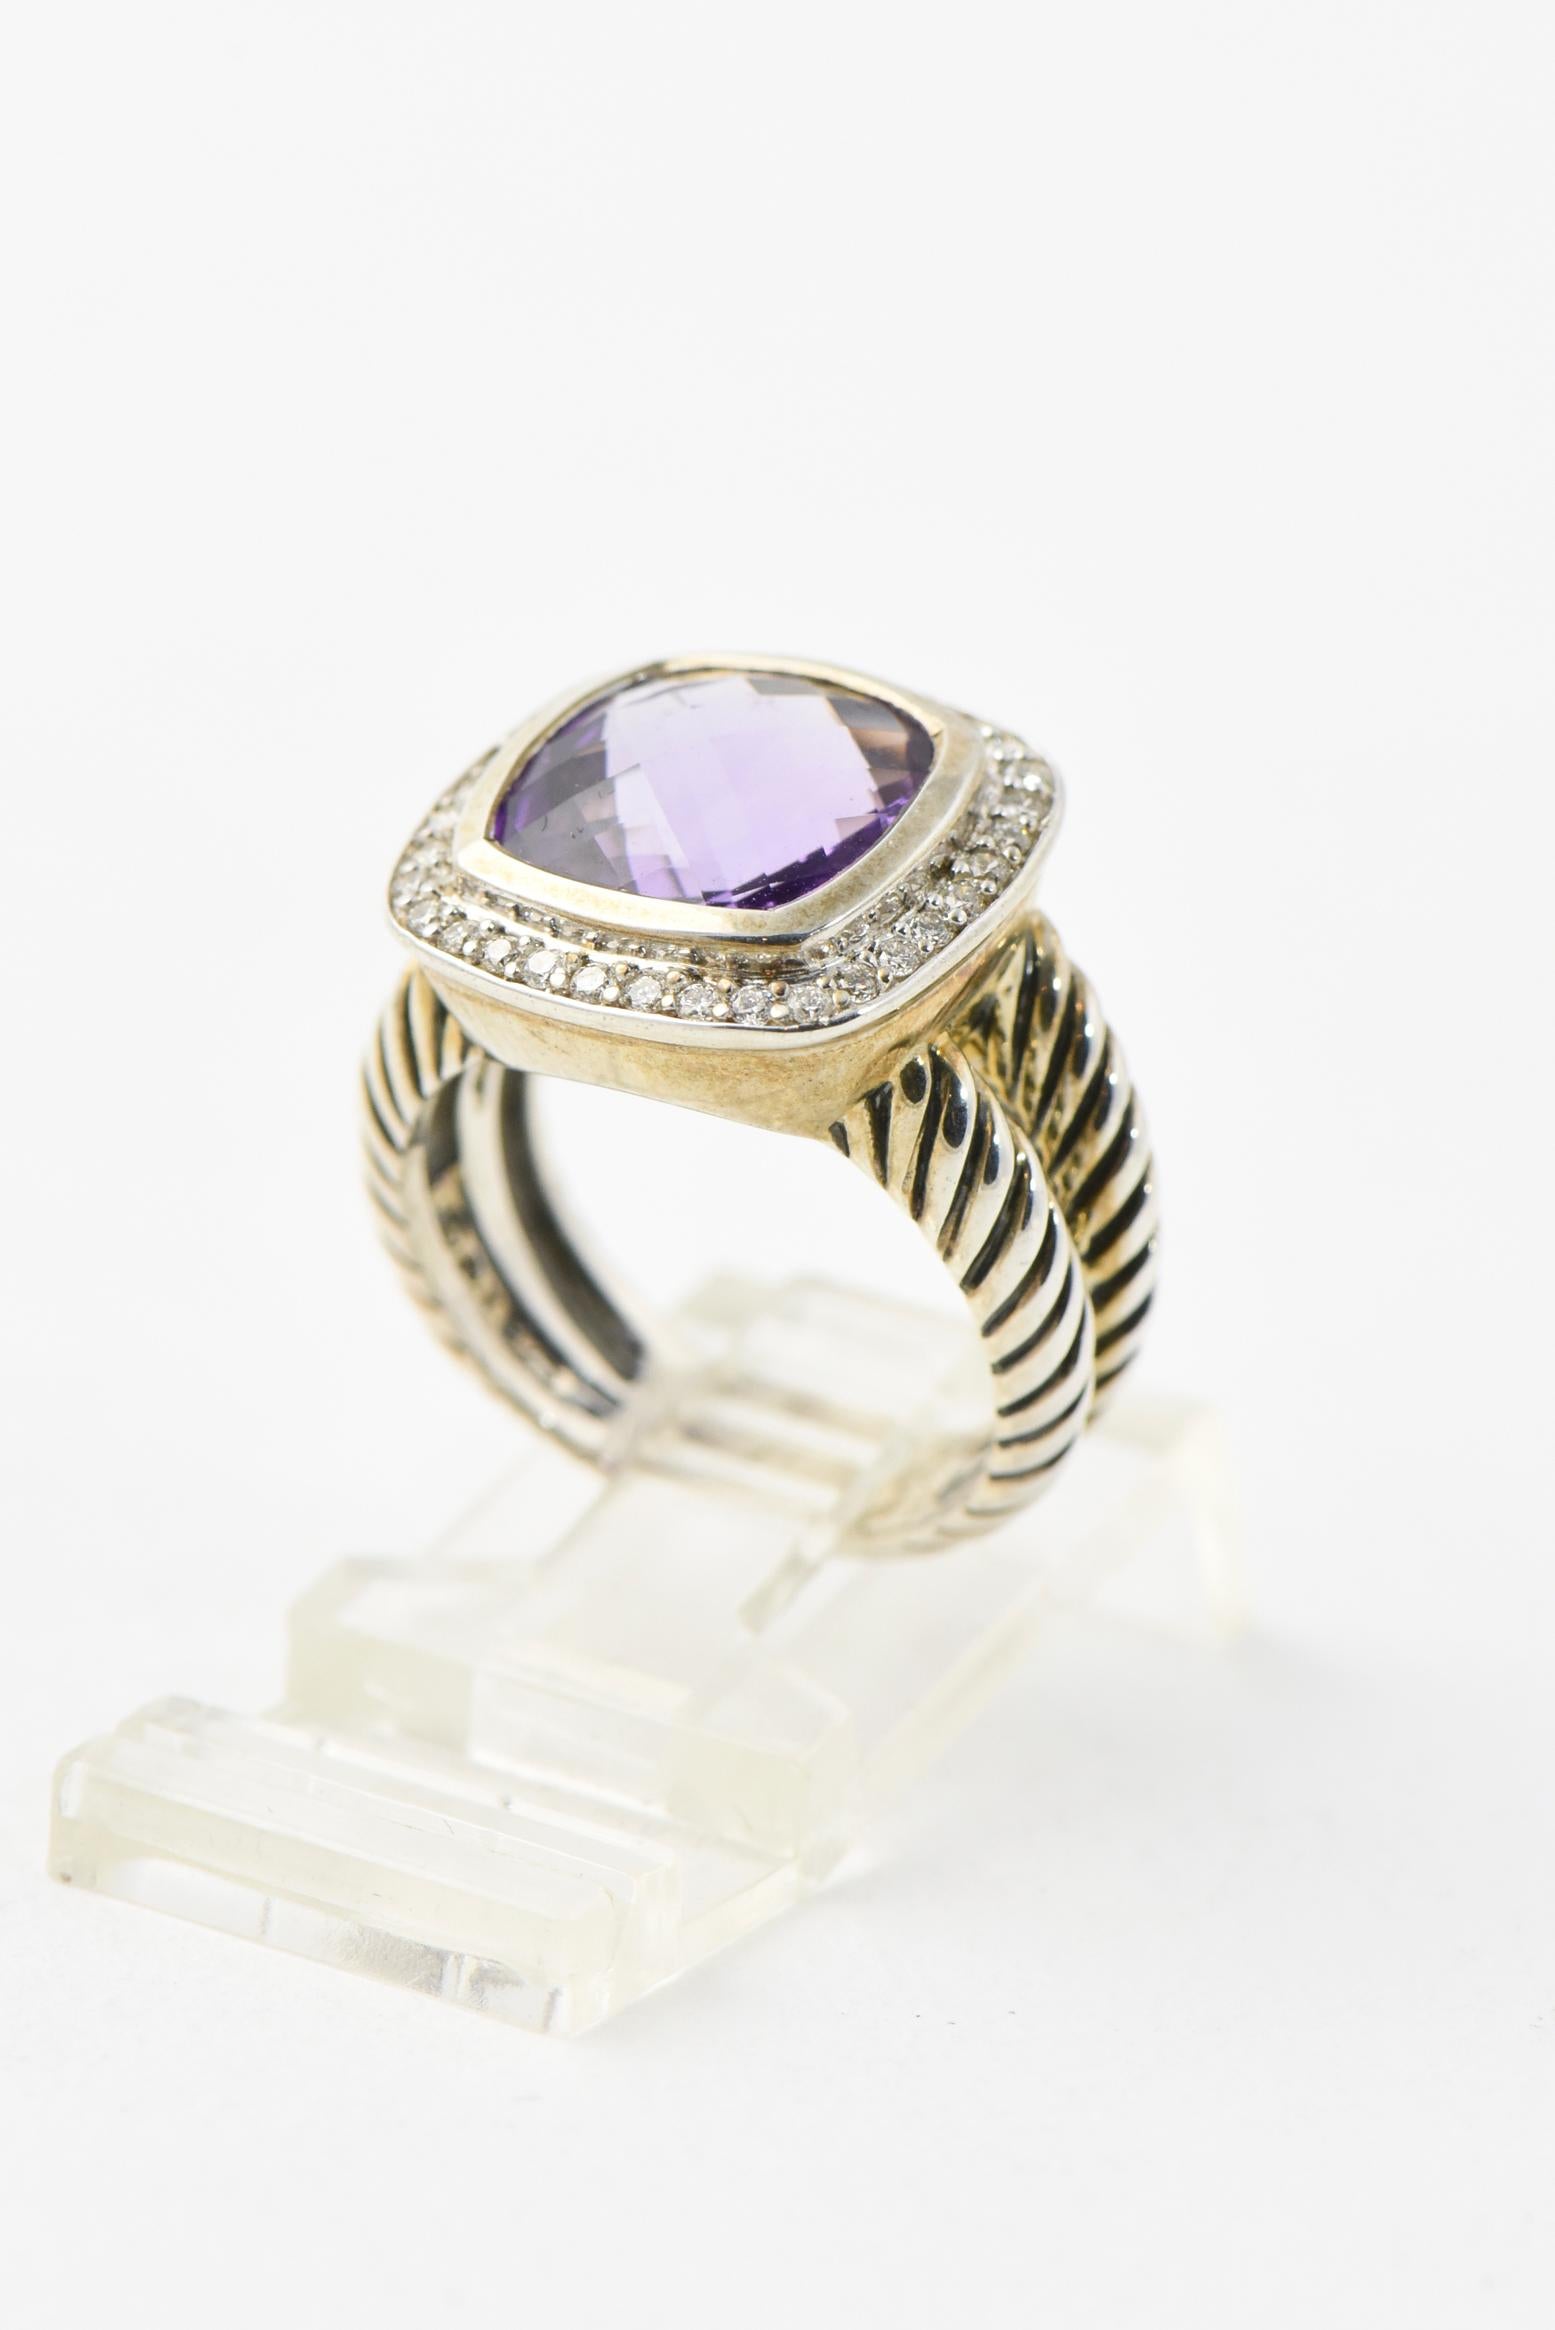 Yurman Amethyst Diamond Sterling Albion Ring In Good Condition For Sale In Miami Beach, FL